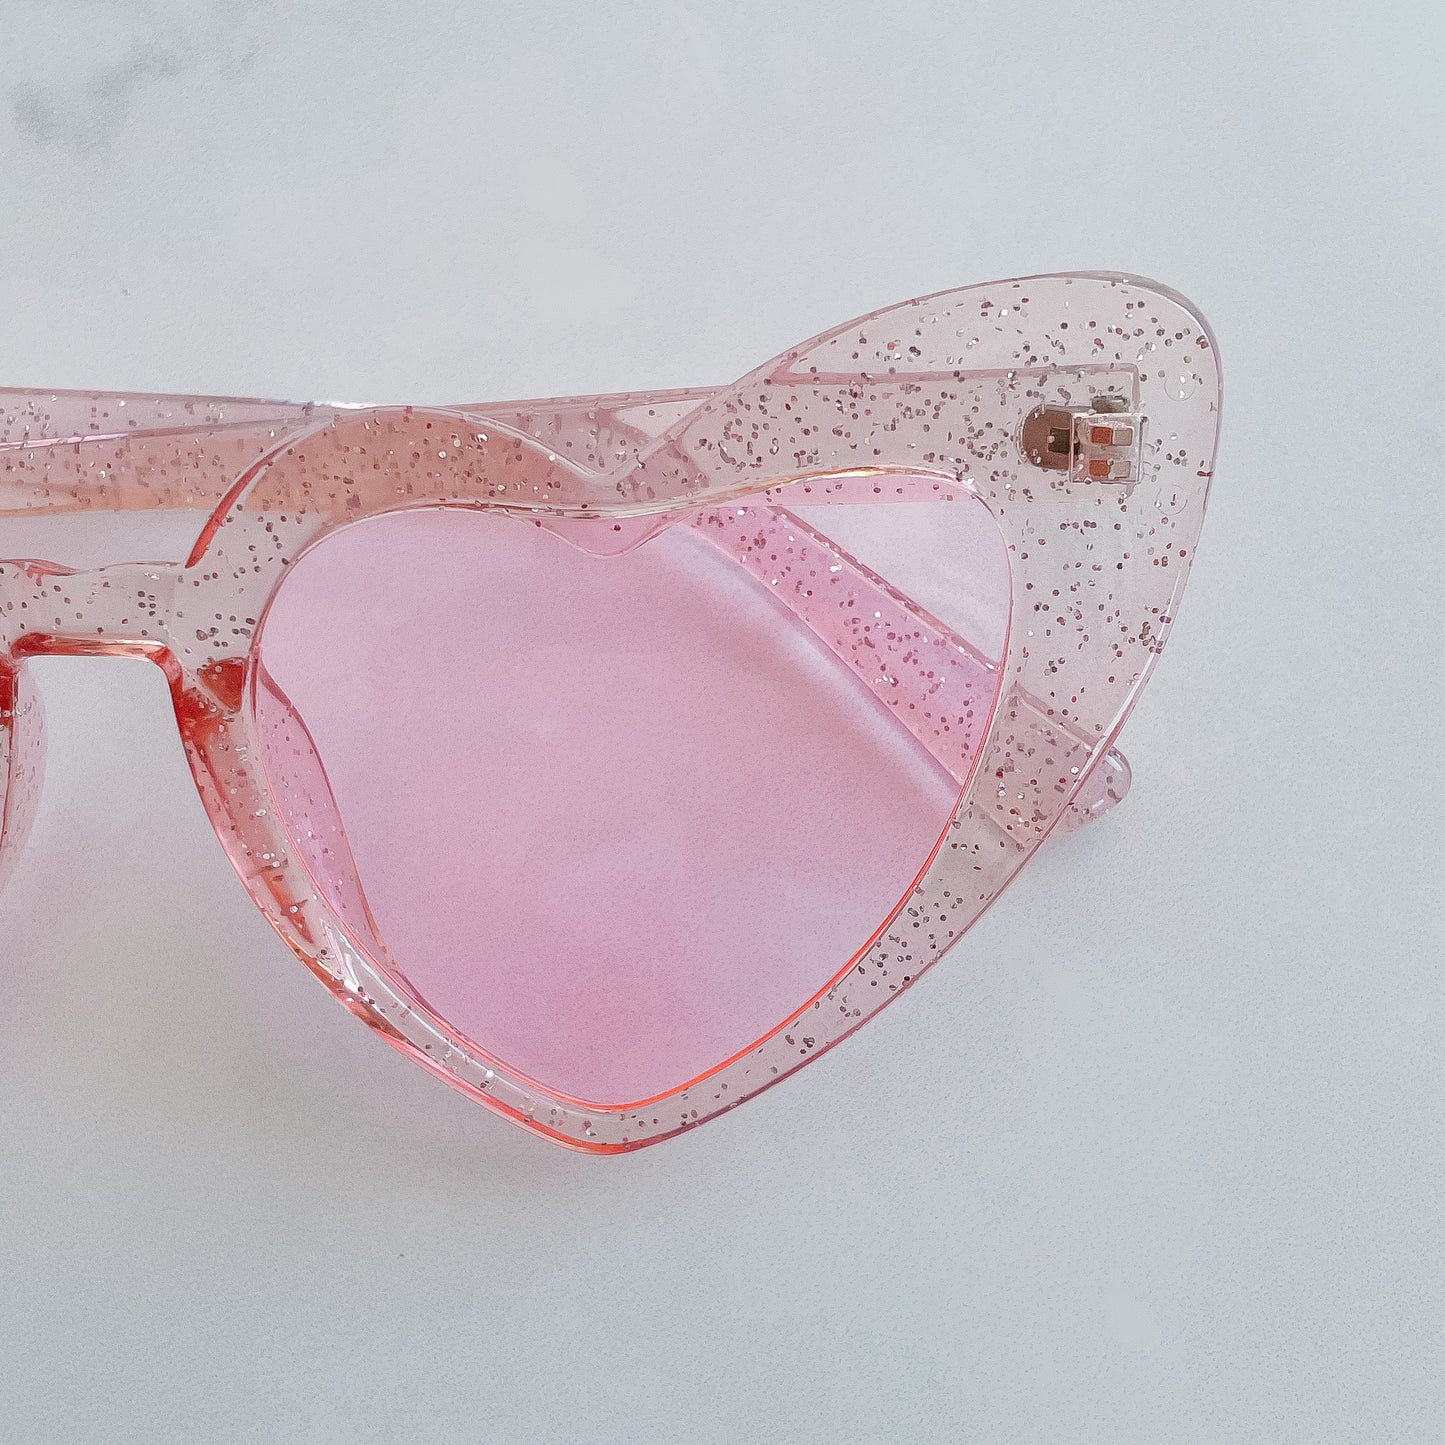 Heart Sunglasses - Pink